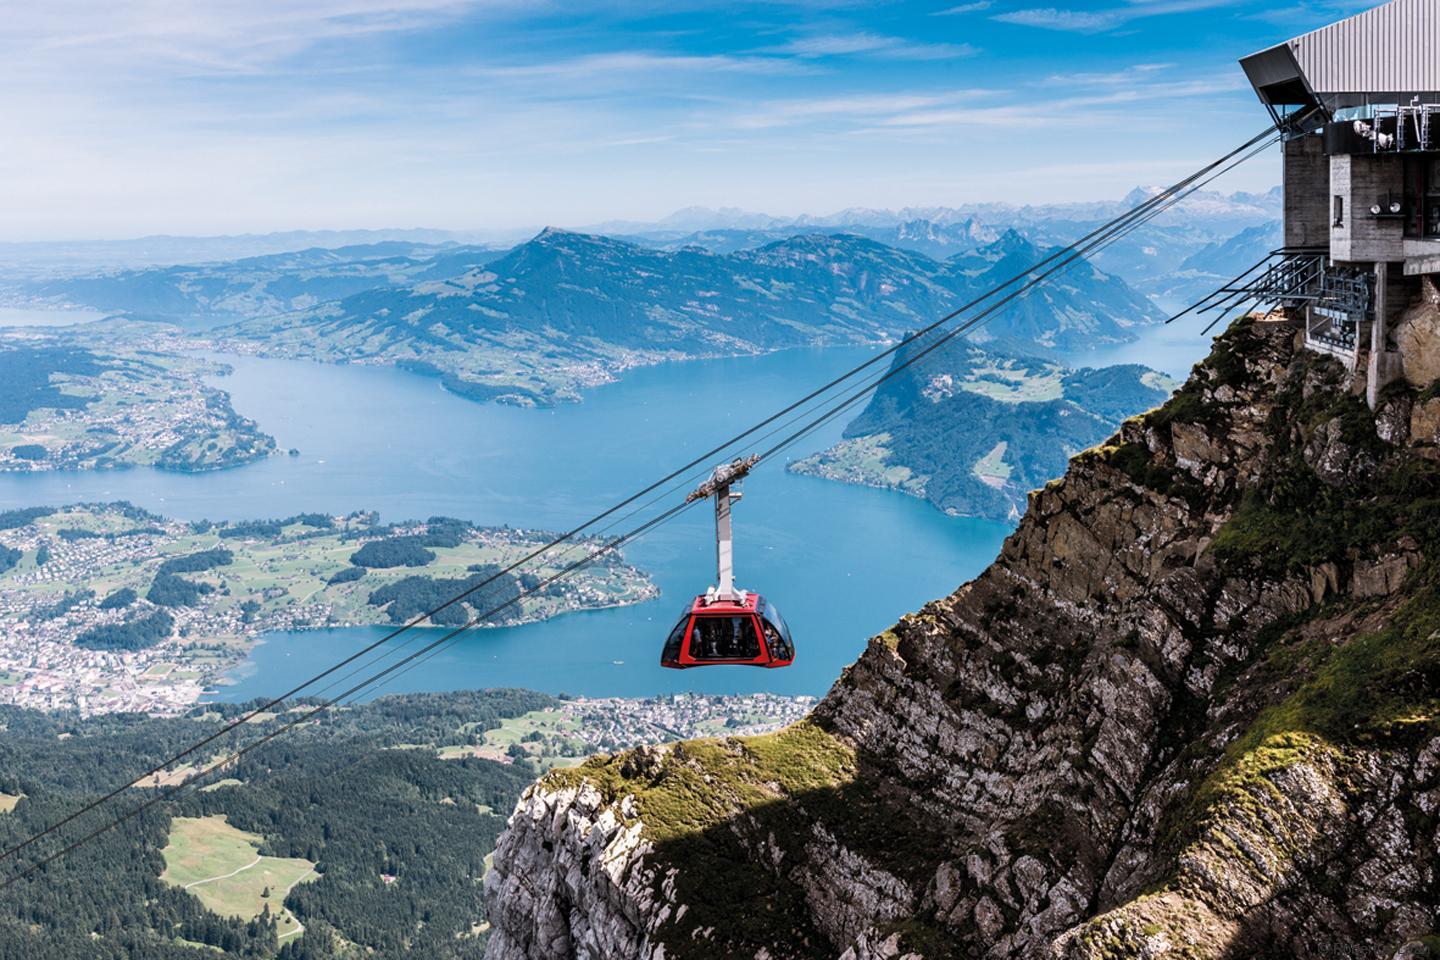 The Pilatus cablecar over Lake Lucerne